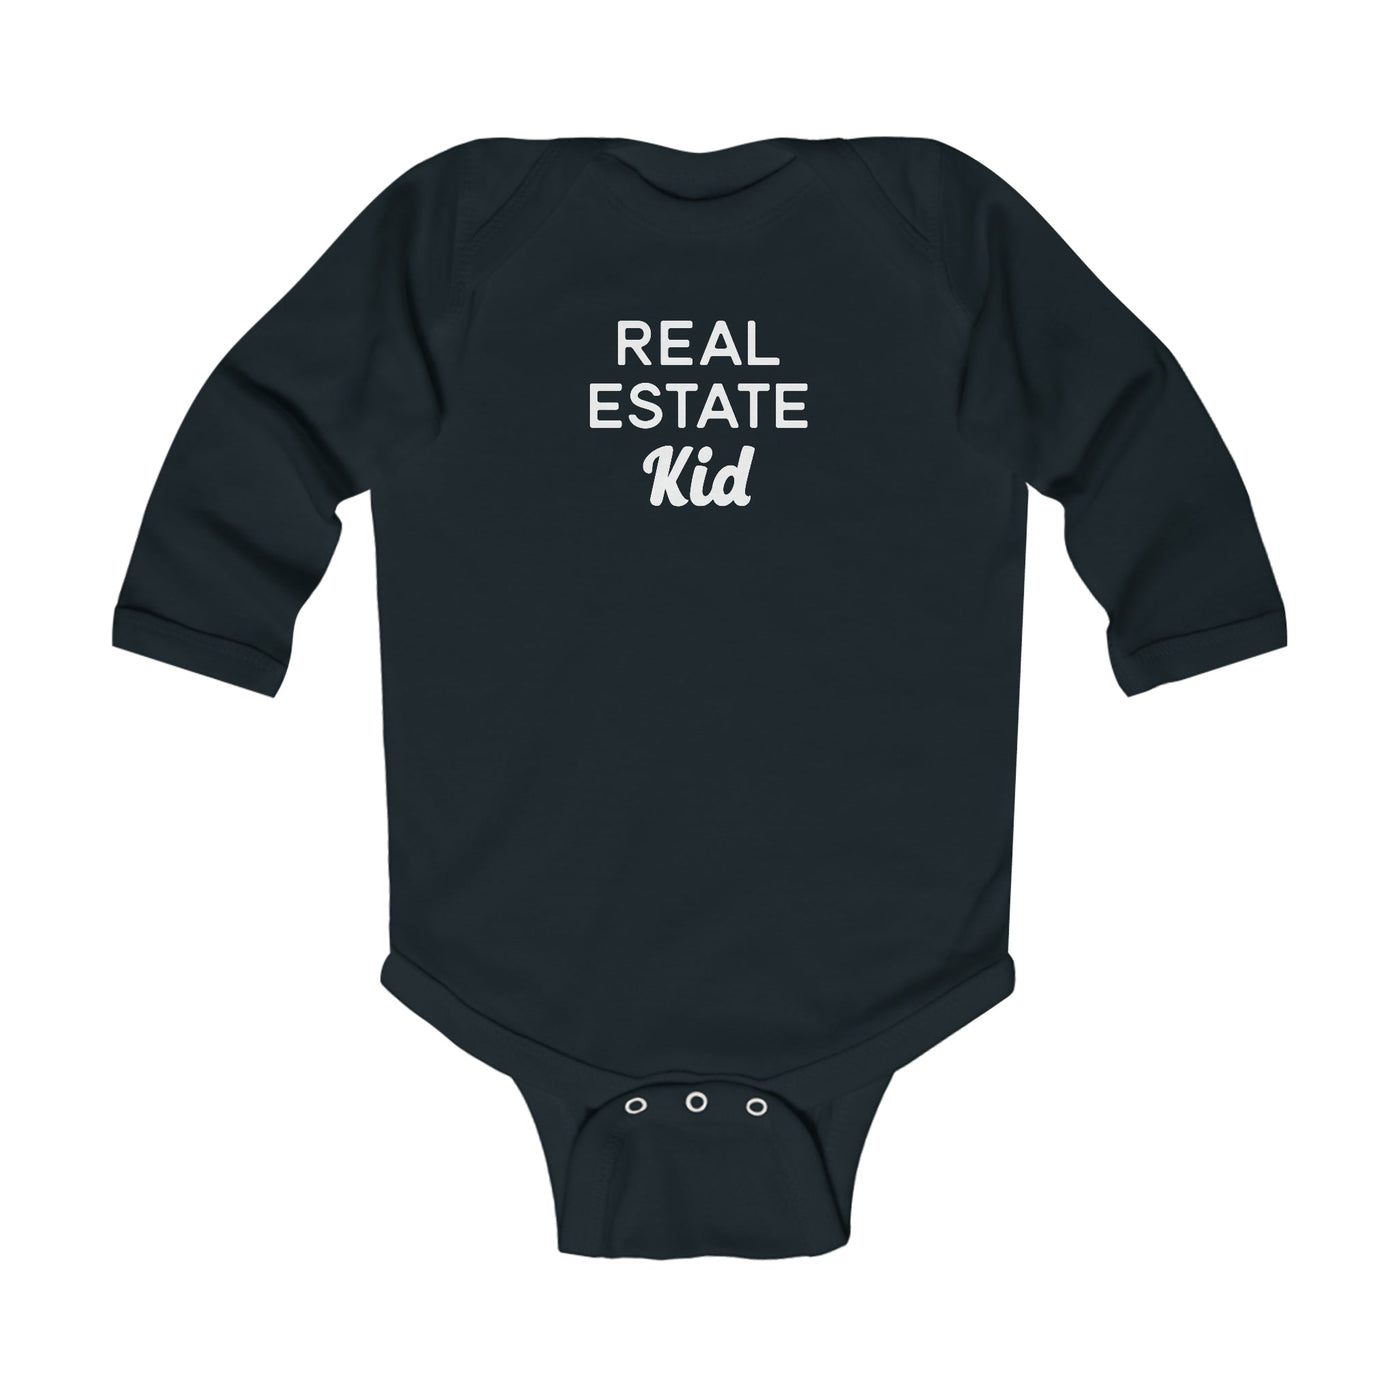 Real Estate Kid - Infant Long Sleeve Bodysuit - All Things Real Estate